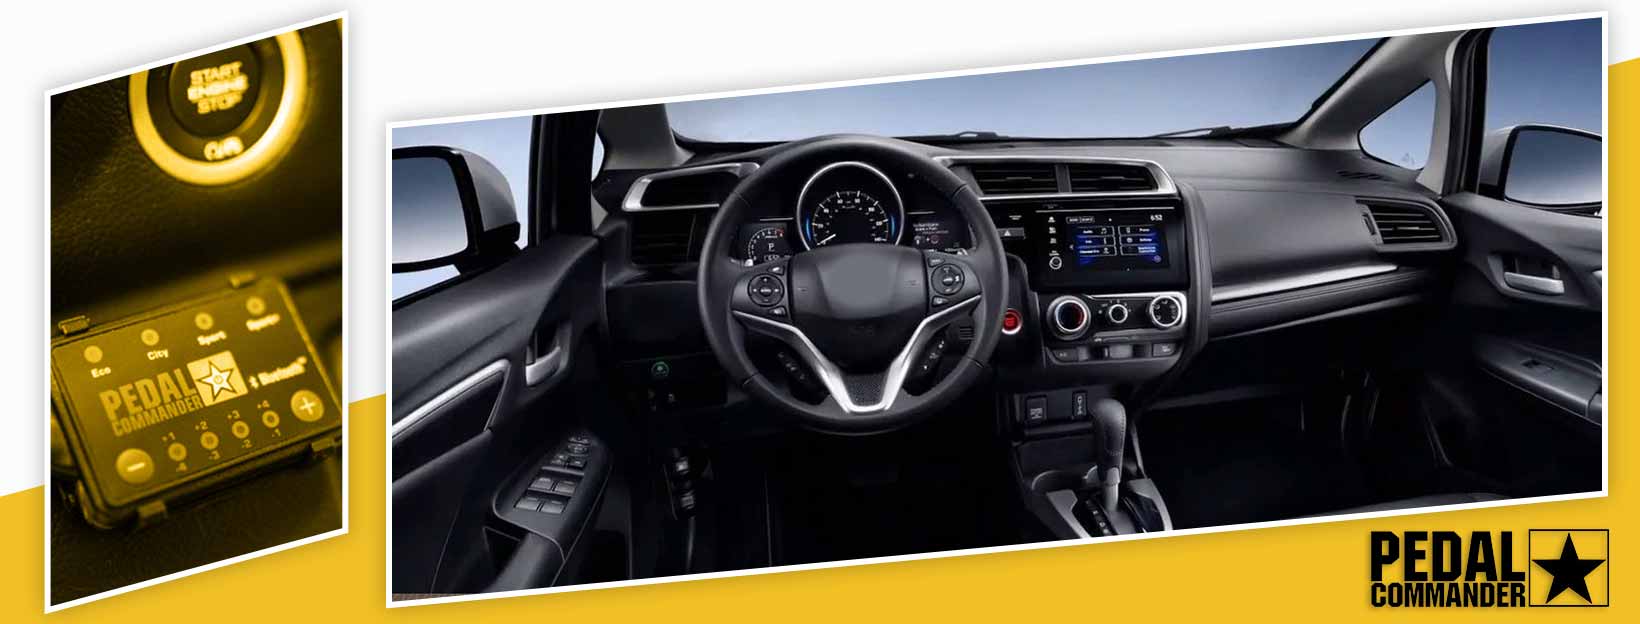 Pedal Commander for Honda Fit - interior